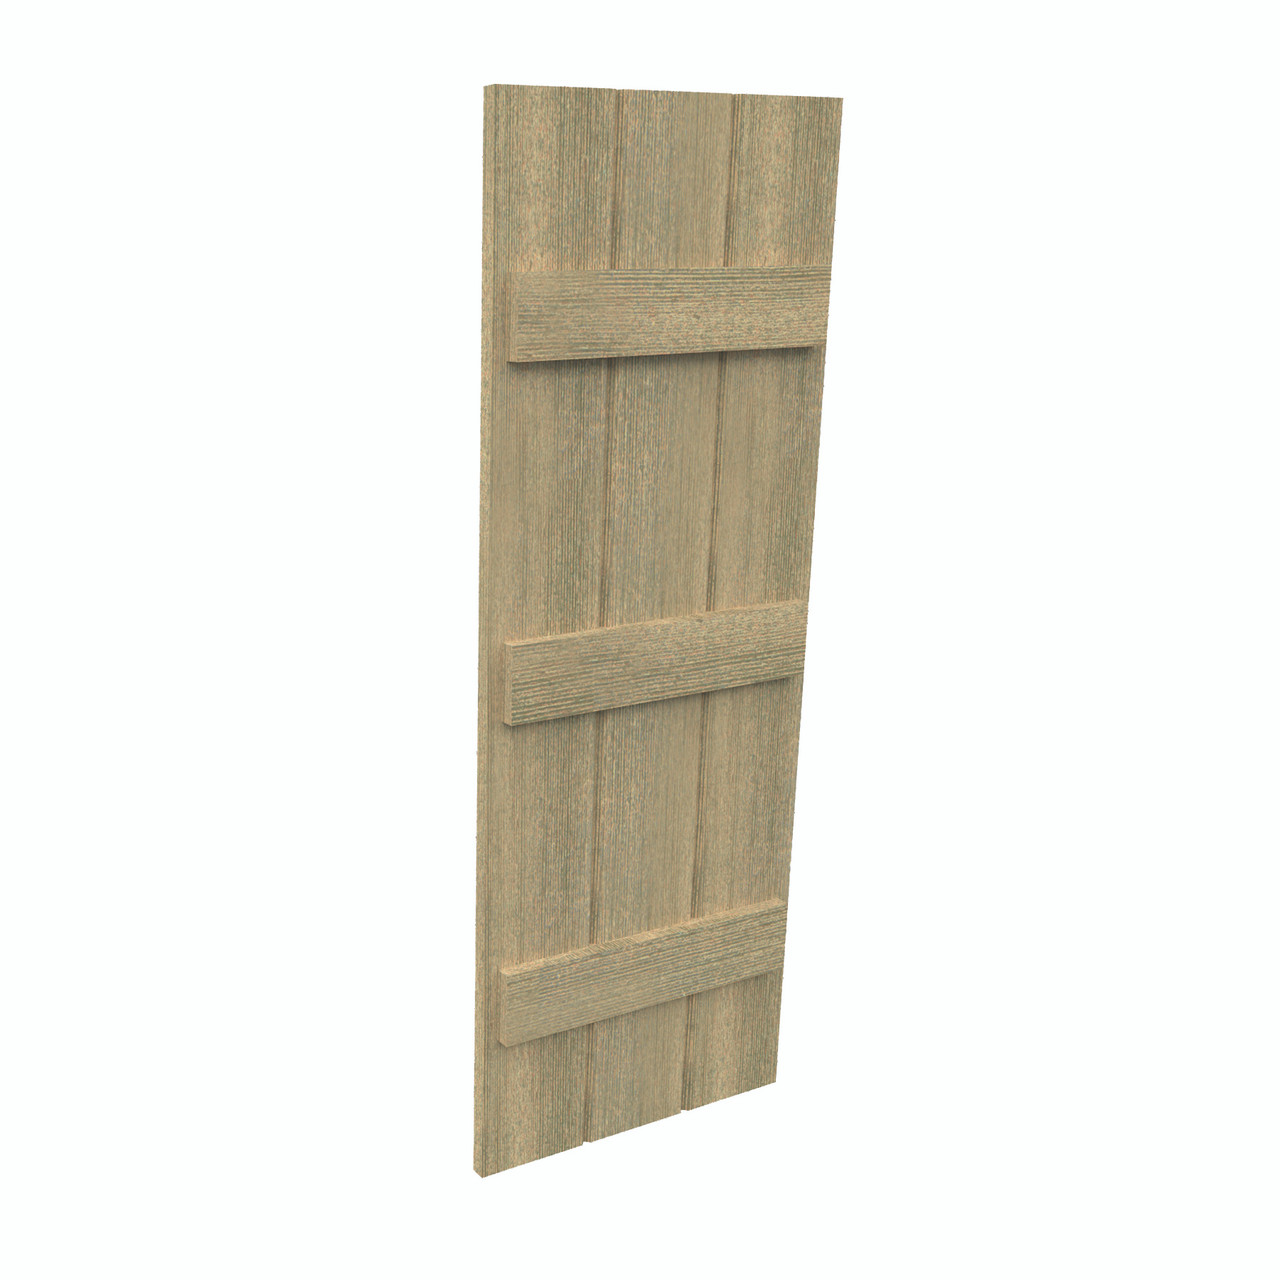 18 inch by 42 inch Plank Shutter with 3-Plank, 3-Batten